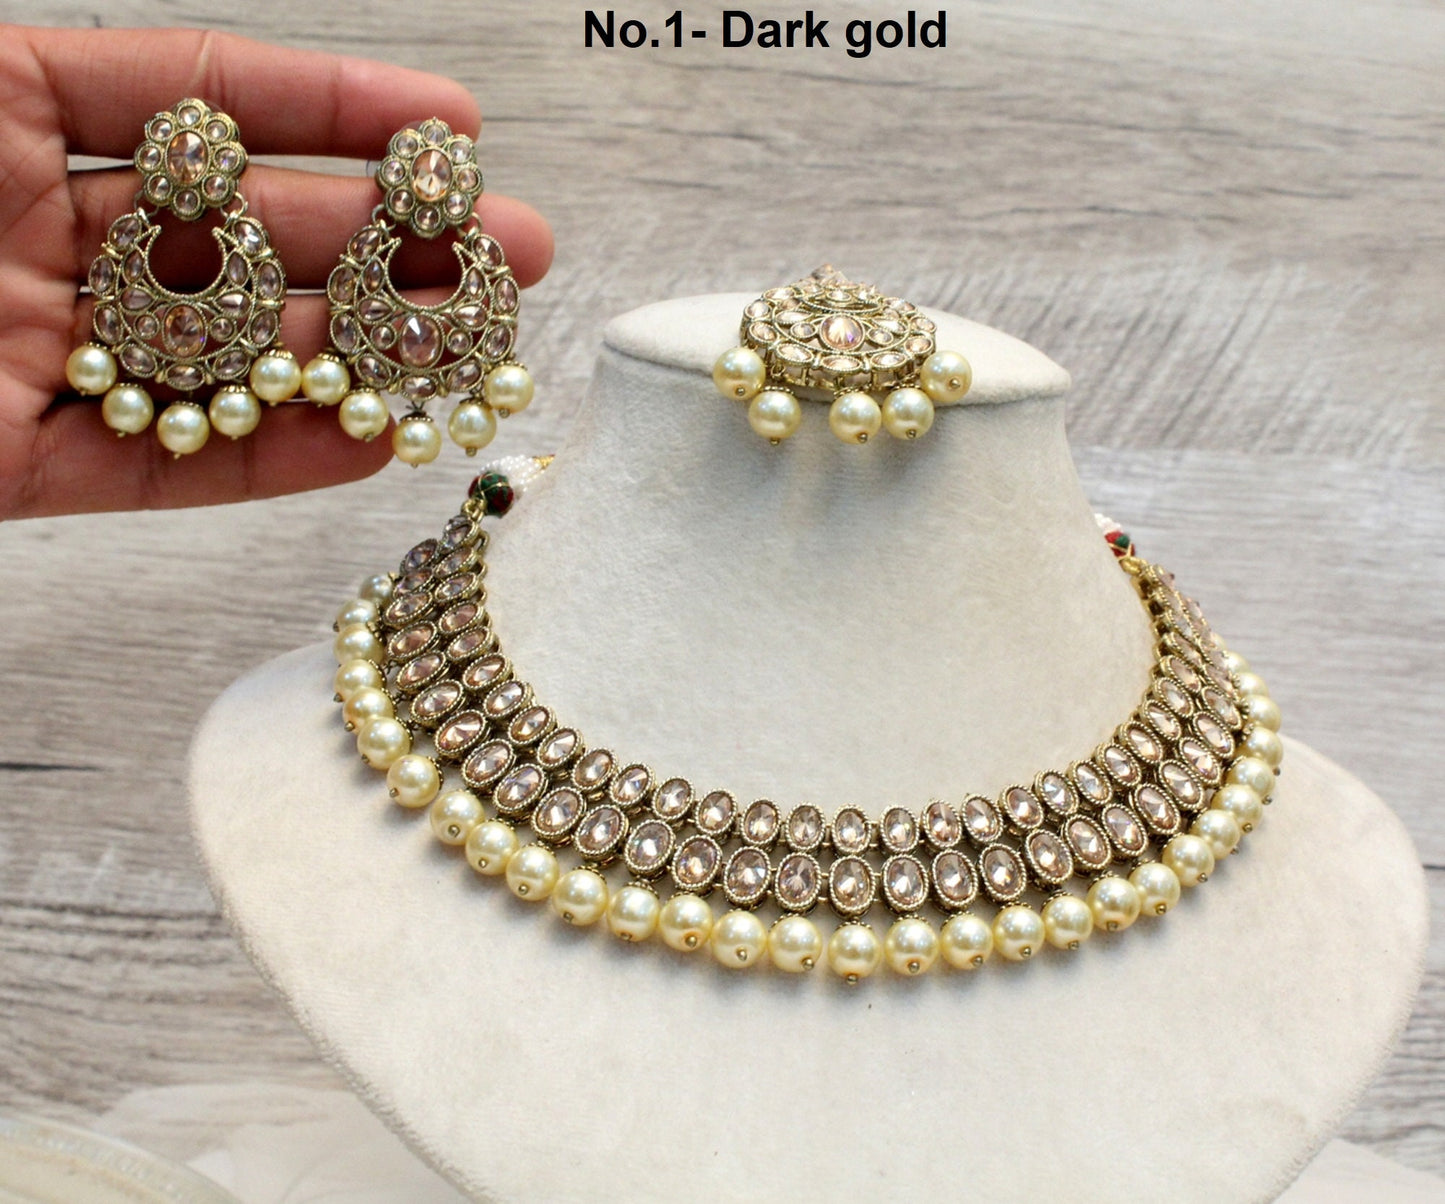 Ivory Indian  Jewellery/Mehndi polish dark gold necklace Set/Bollywood Gold Indian Jewelry Jewellery fairlawn Set /Bridesmaid sets